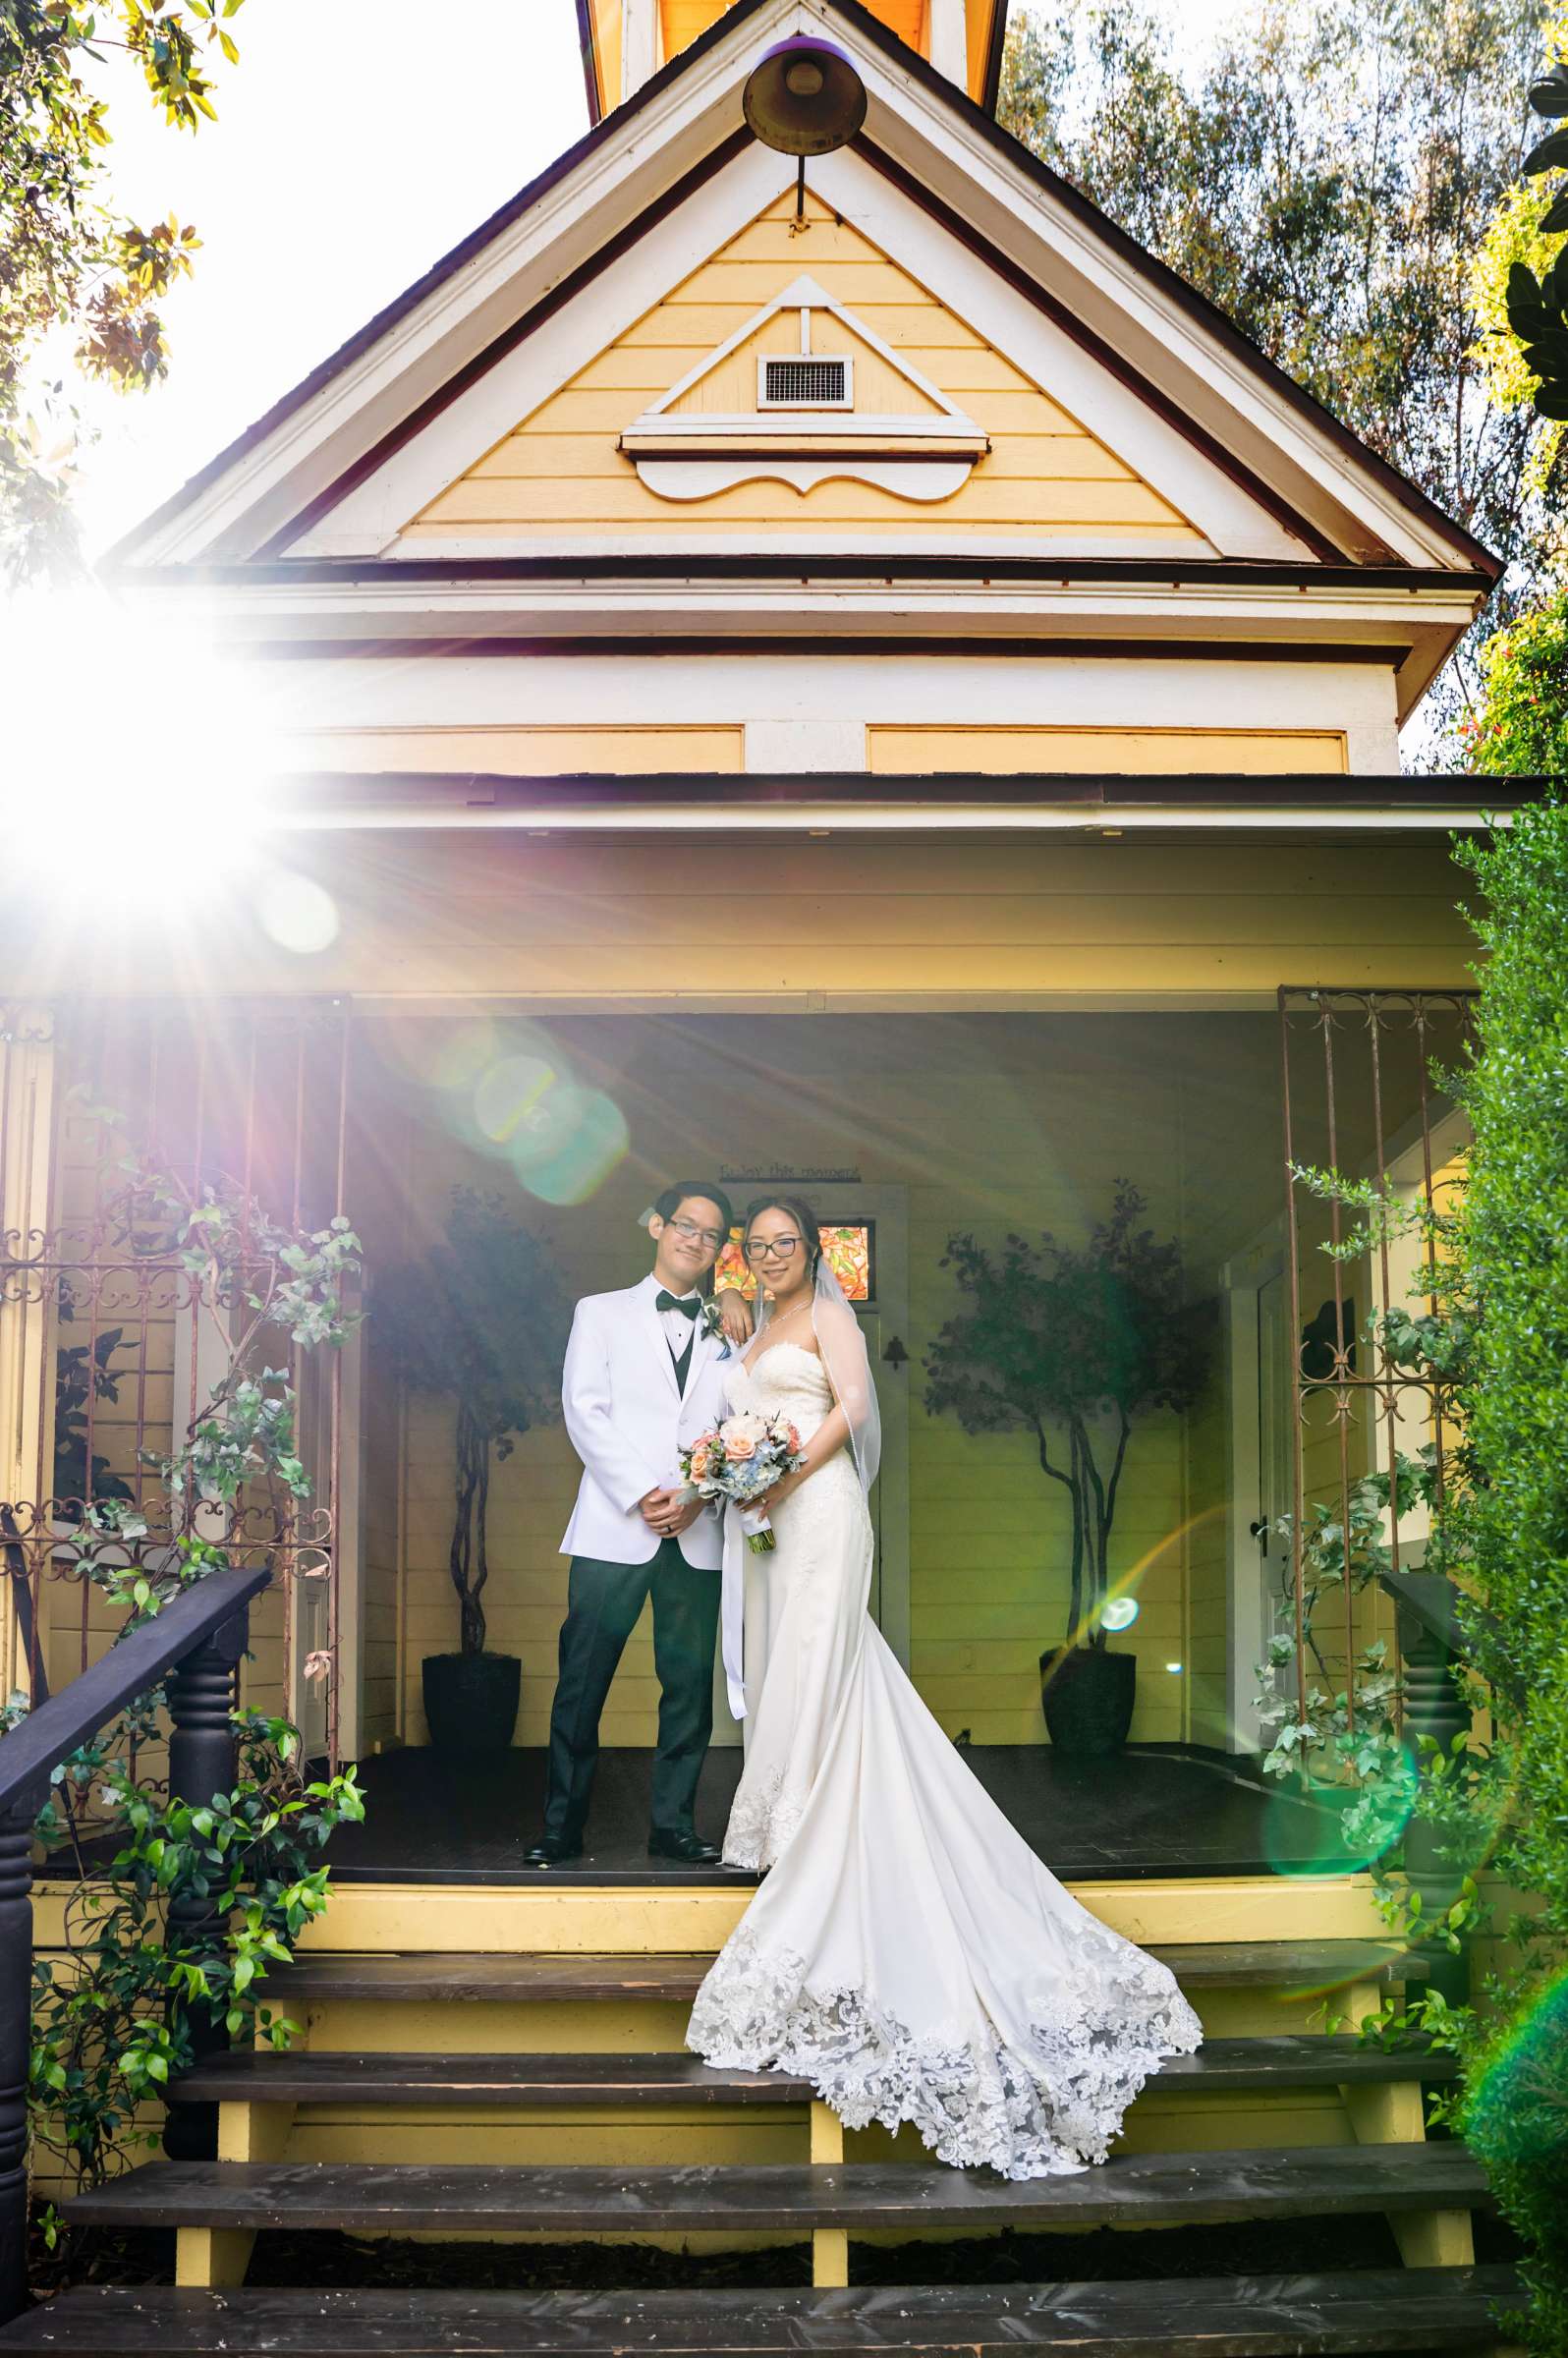 Twin Oaks House & Gardens Wedding Estate Wedding, Winnie and Wilber Wedding Photo #4 by True Photography